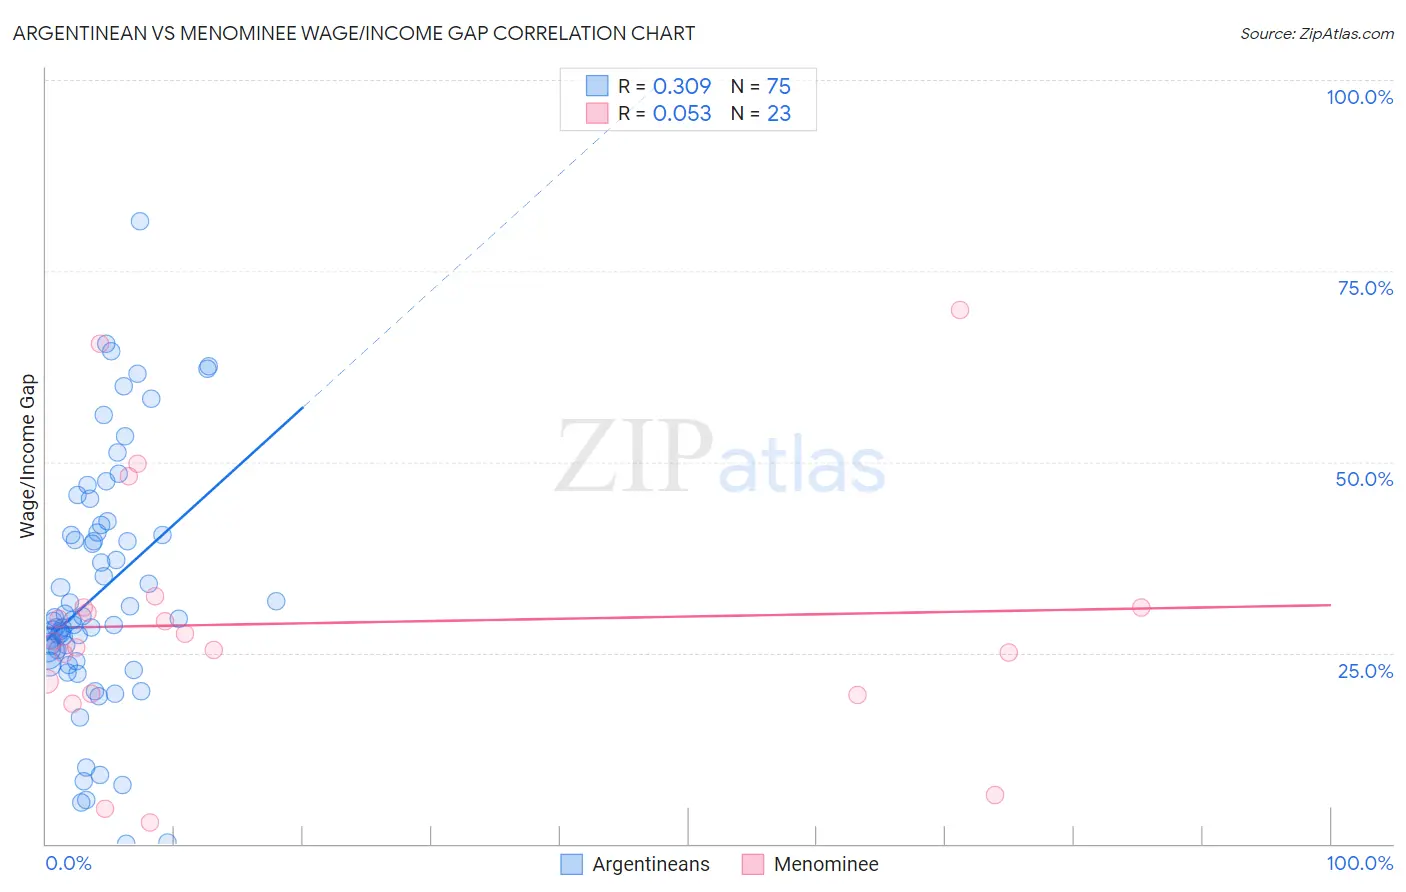 Argentinean vs Menominee Wage/Income Gap